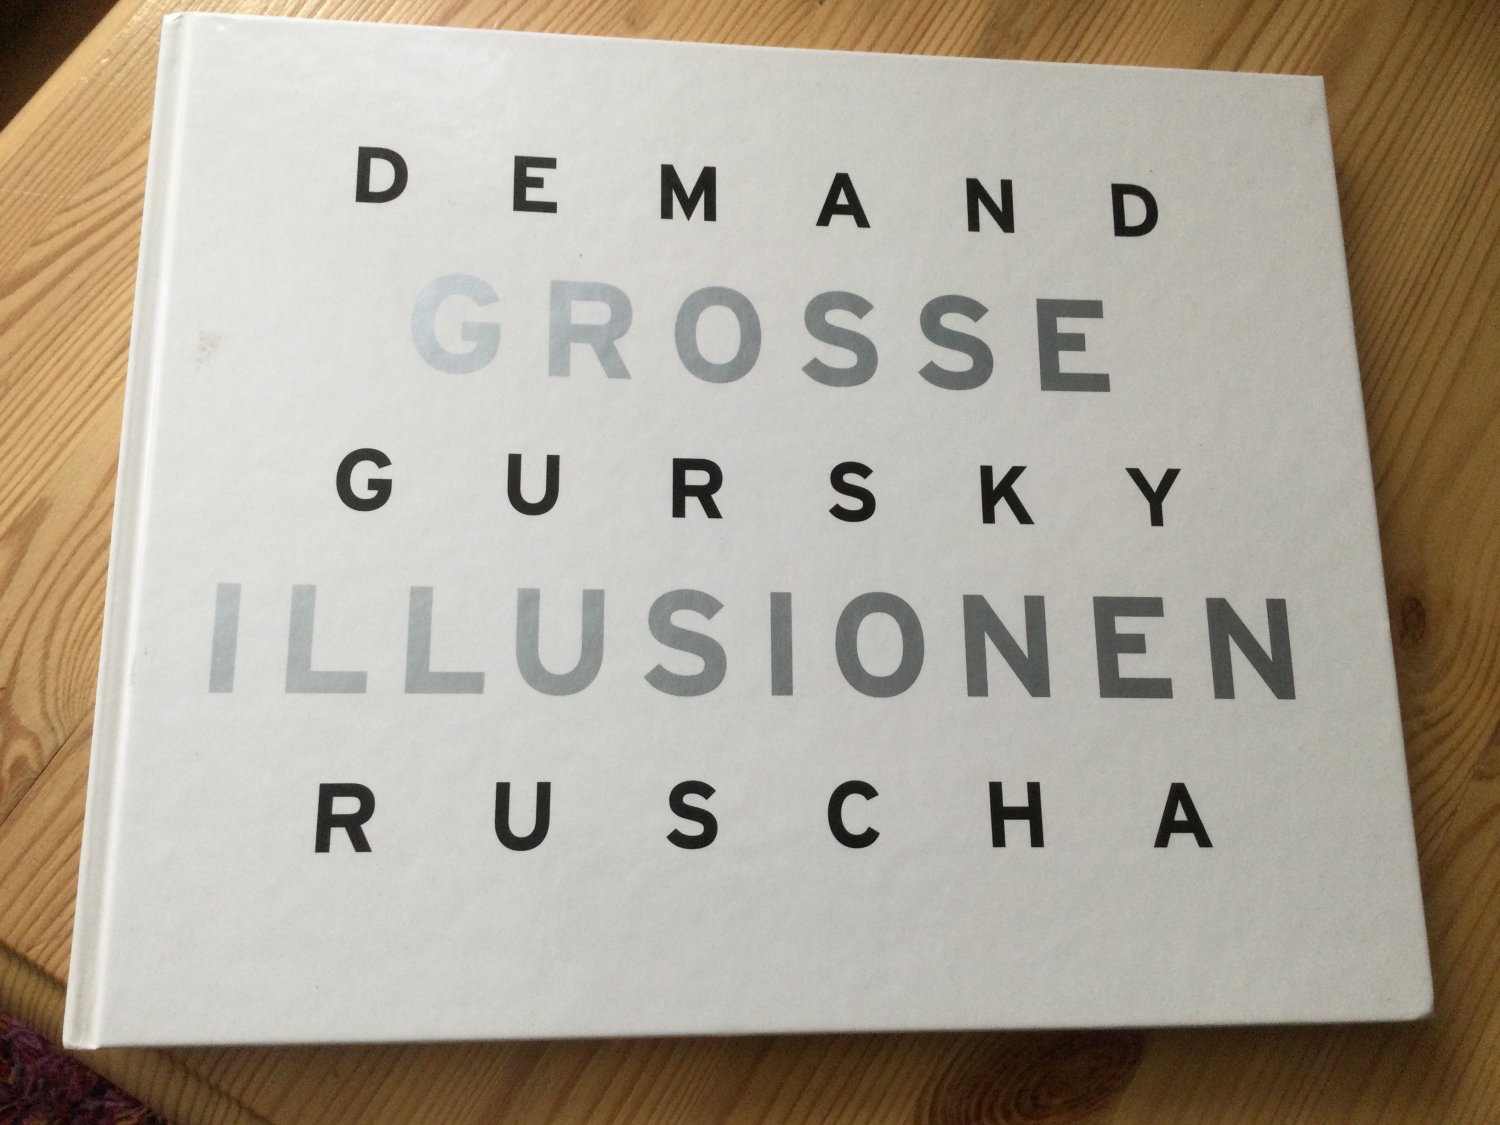 Große Illusionen Thomas Demand Andreas Gursky Ed Ruscha“ (Demand